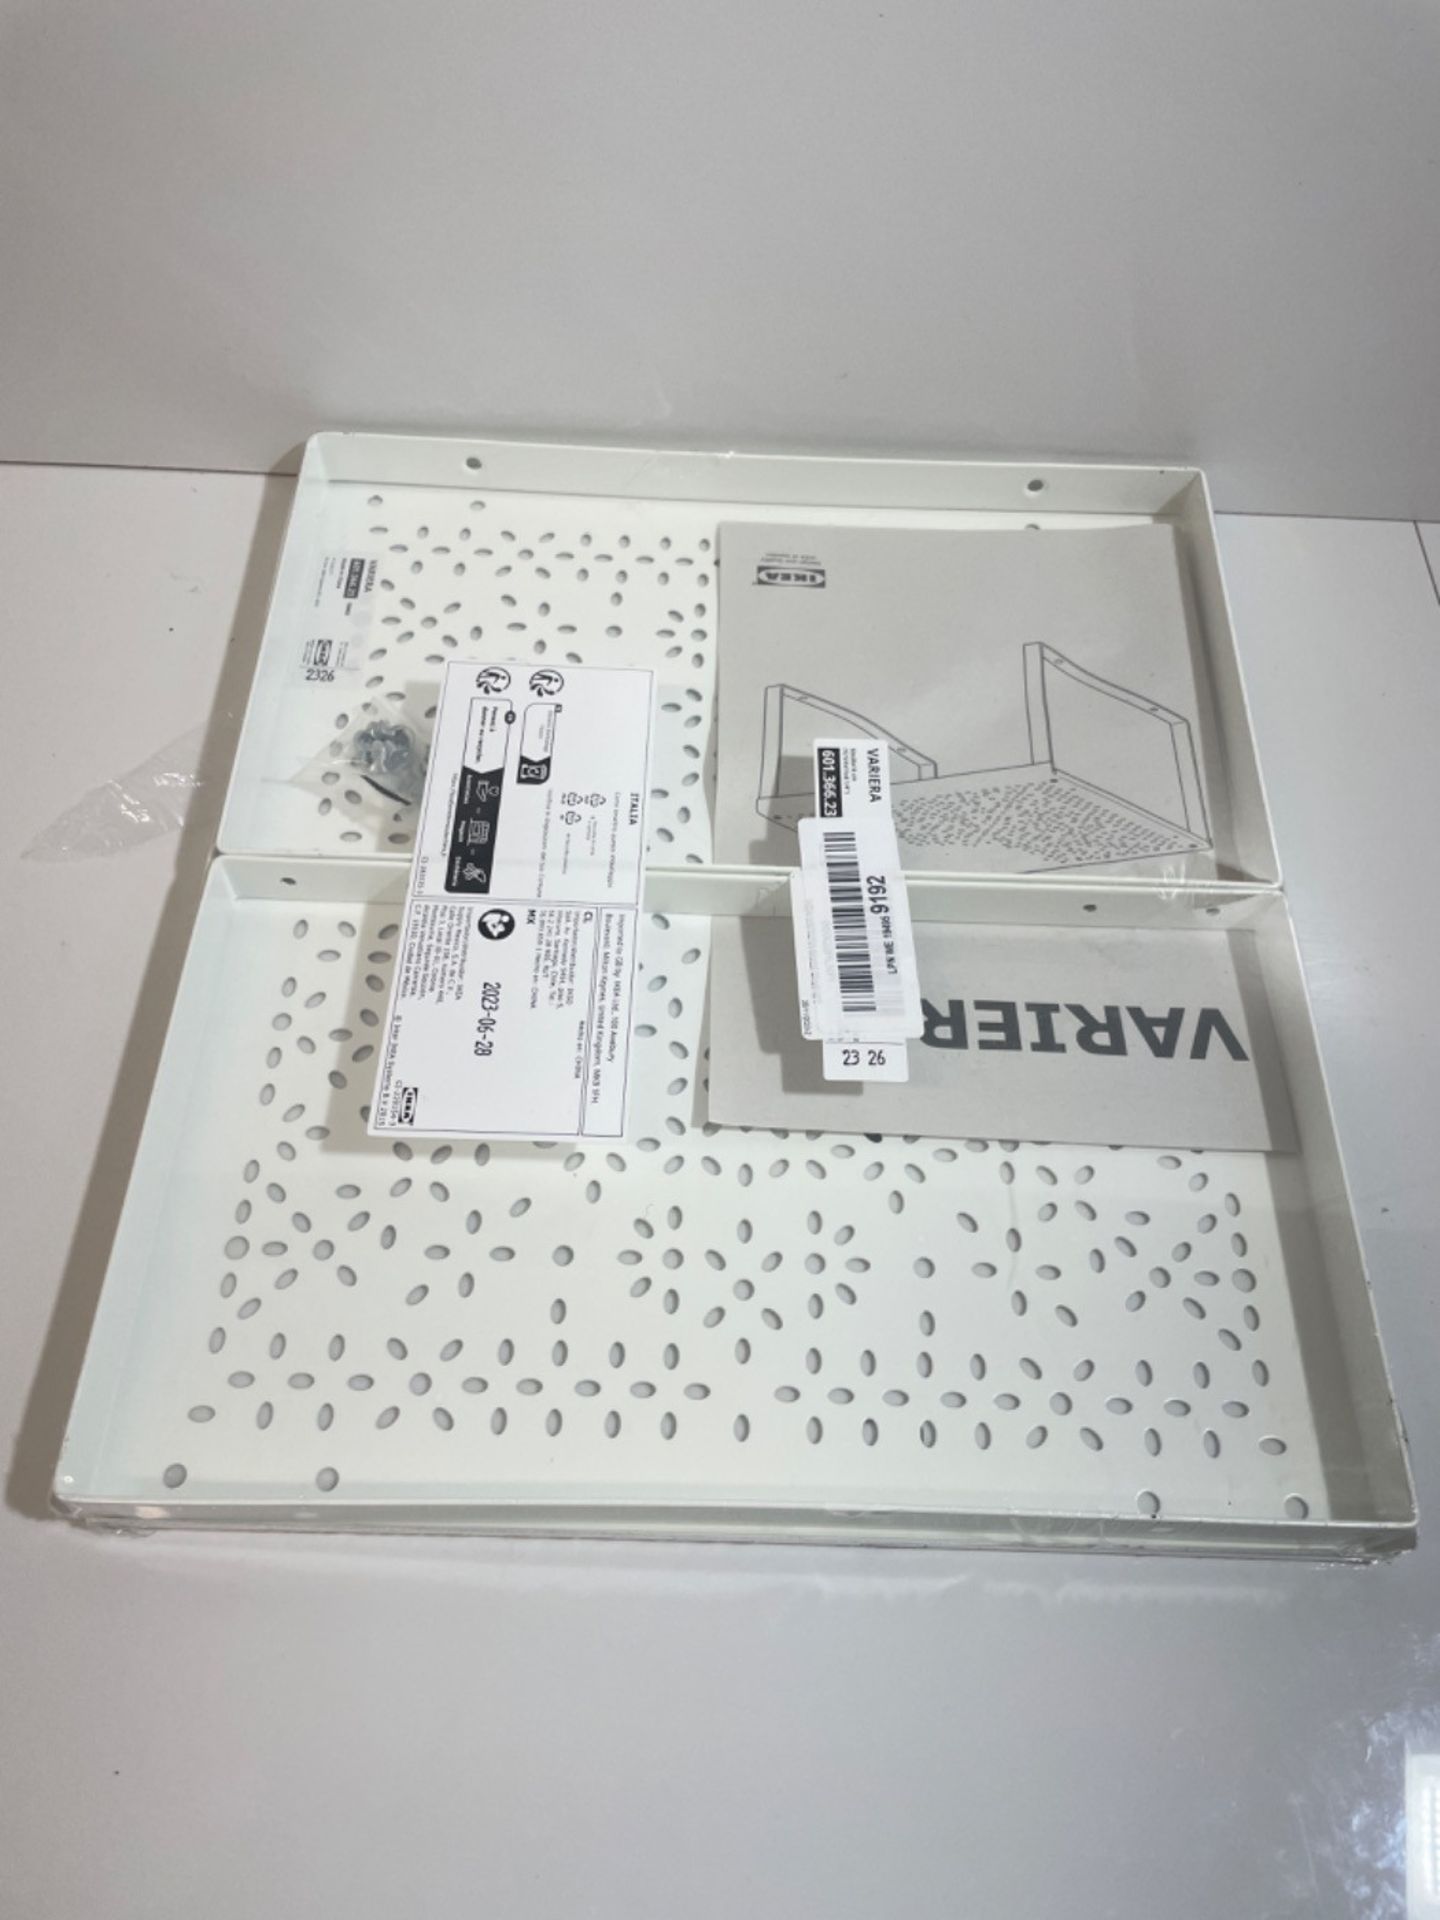 Ikea VARIERA Shelf Insert White 32x28x16 cm 601.366.23 One Size,Others_SML, 32x28x16cm - Image 2 of 2